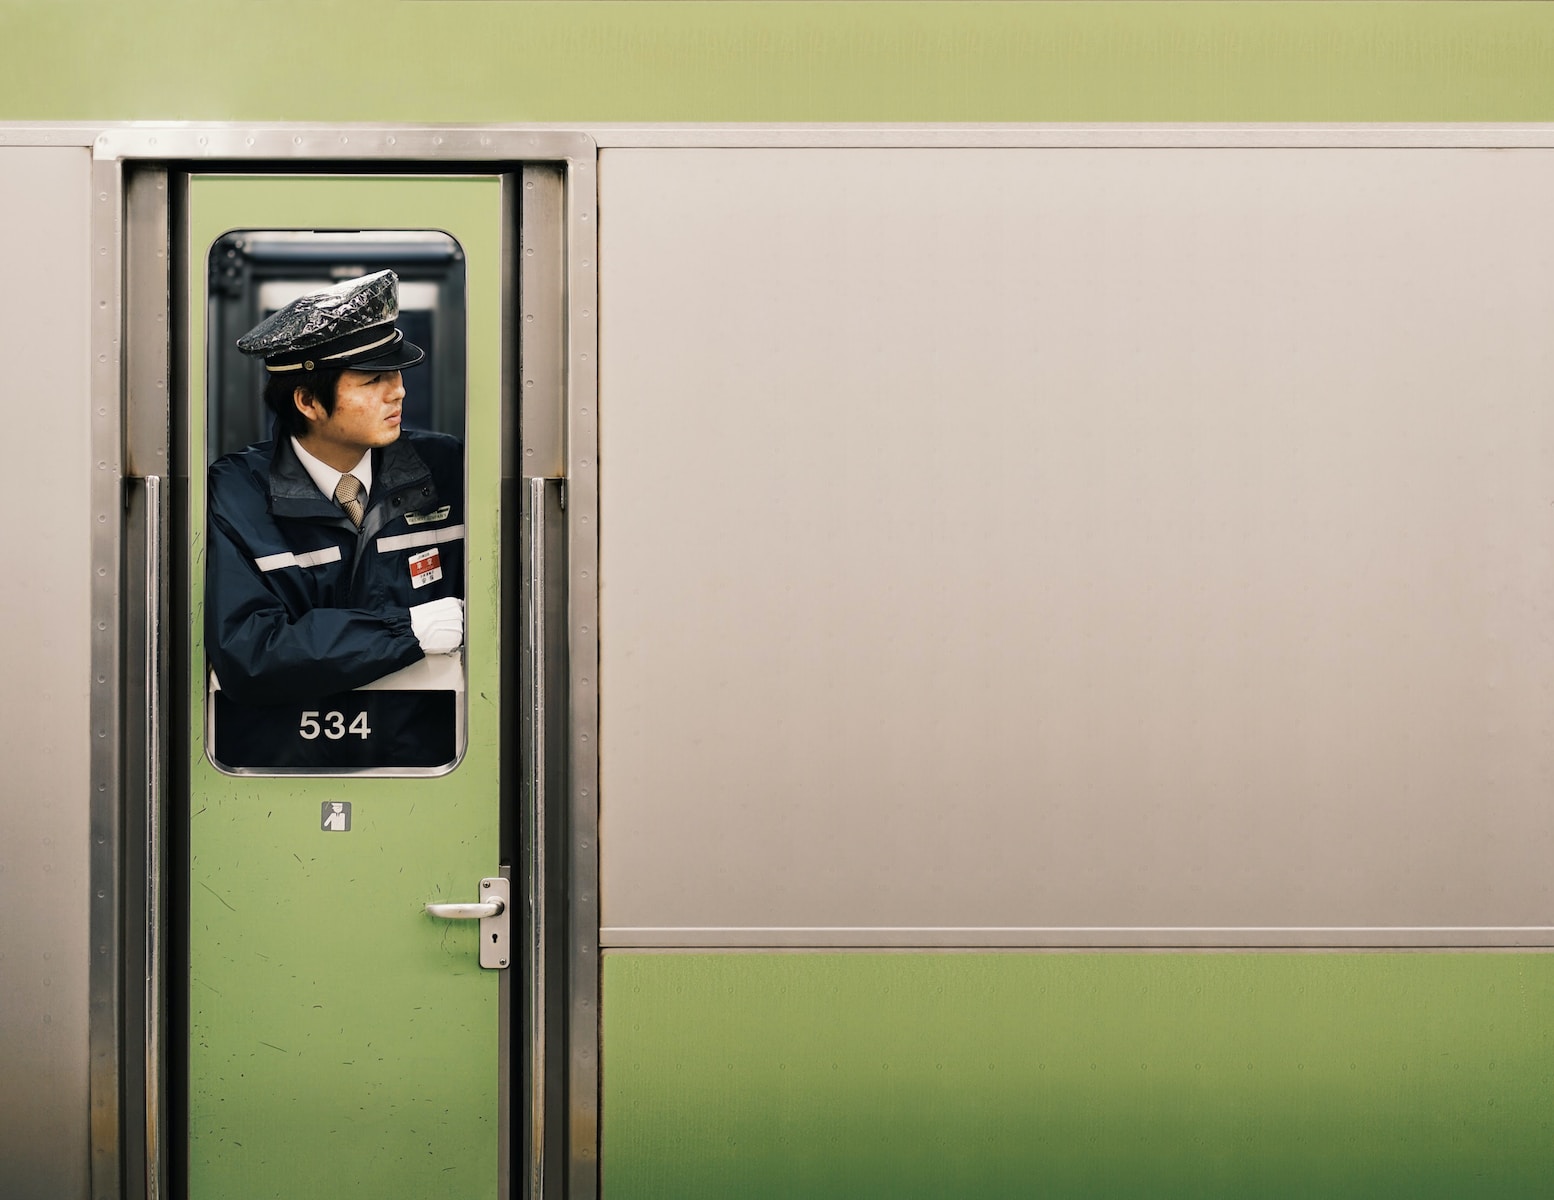 a man in uniform is seen through the door of a train